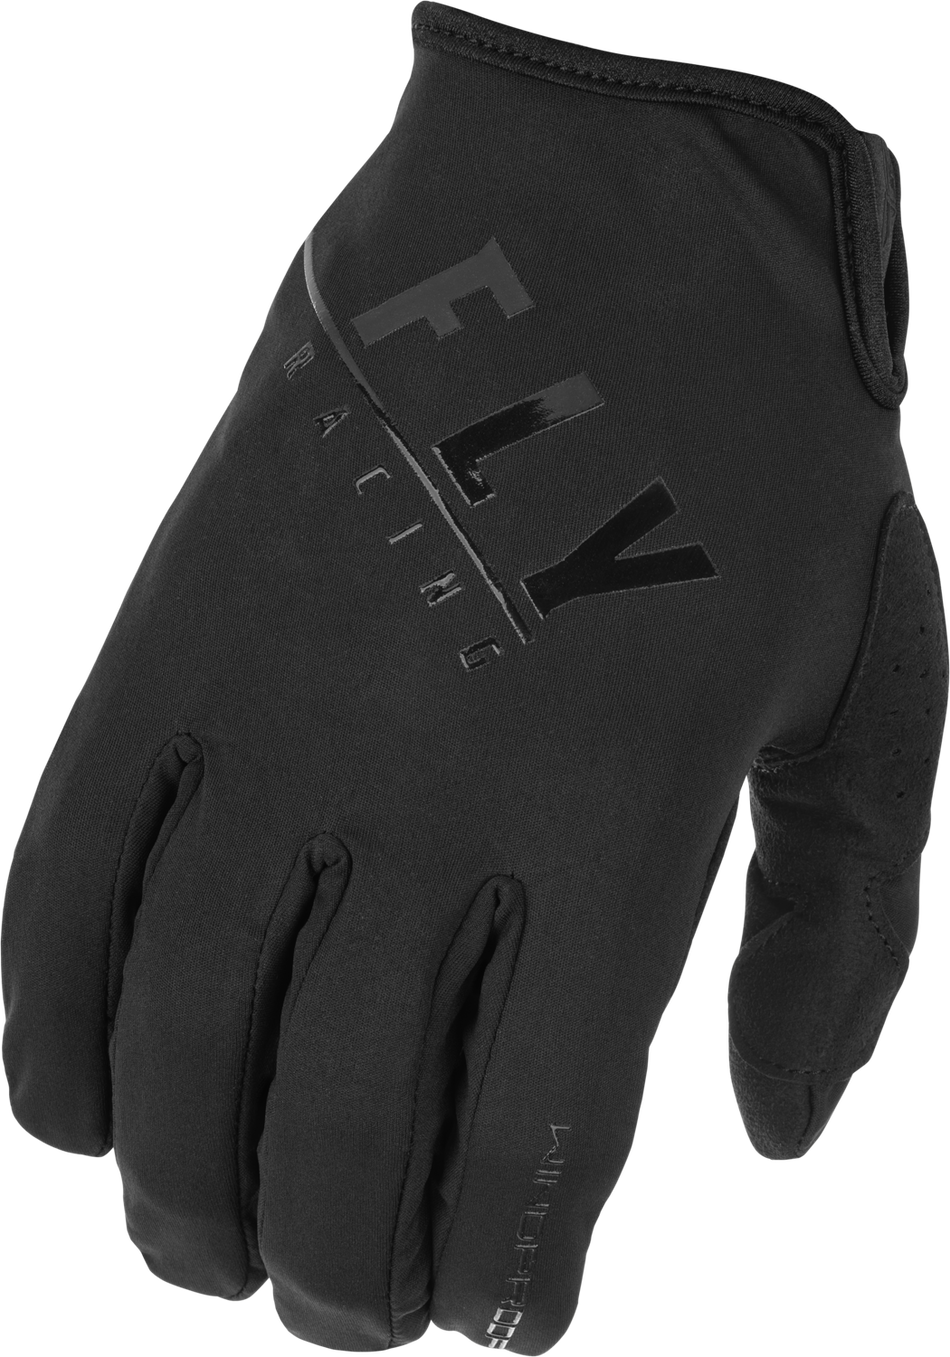 FLY RACING Windproof Gloves Black Sz 07 371-14107